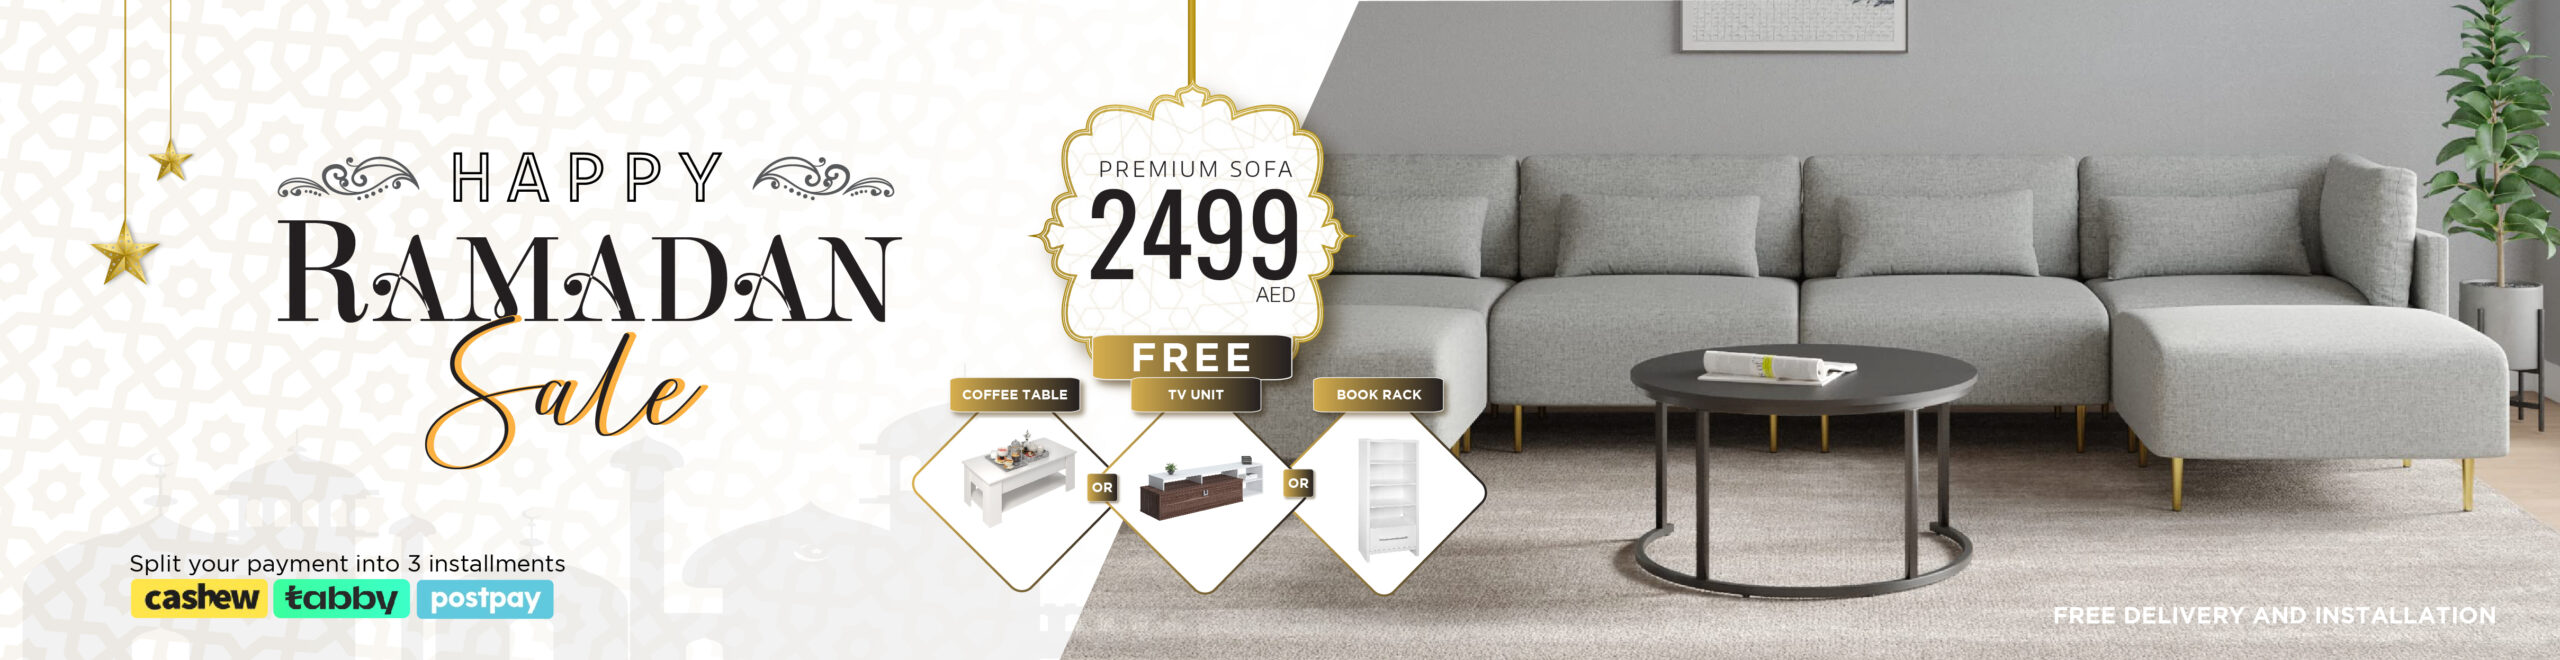 Ramadan Sale For Premium Sofa